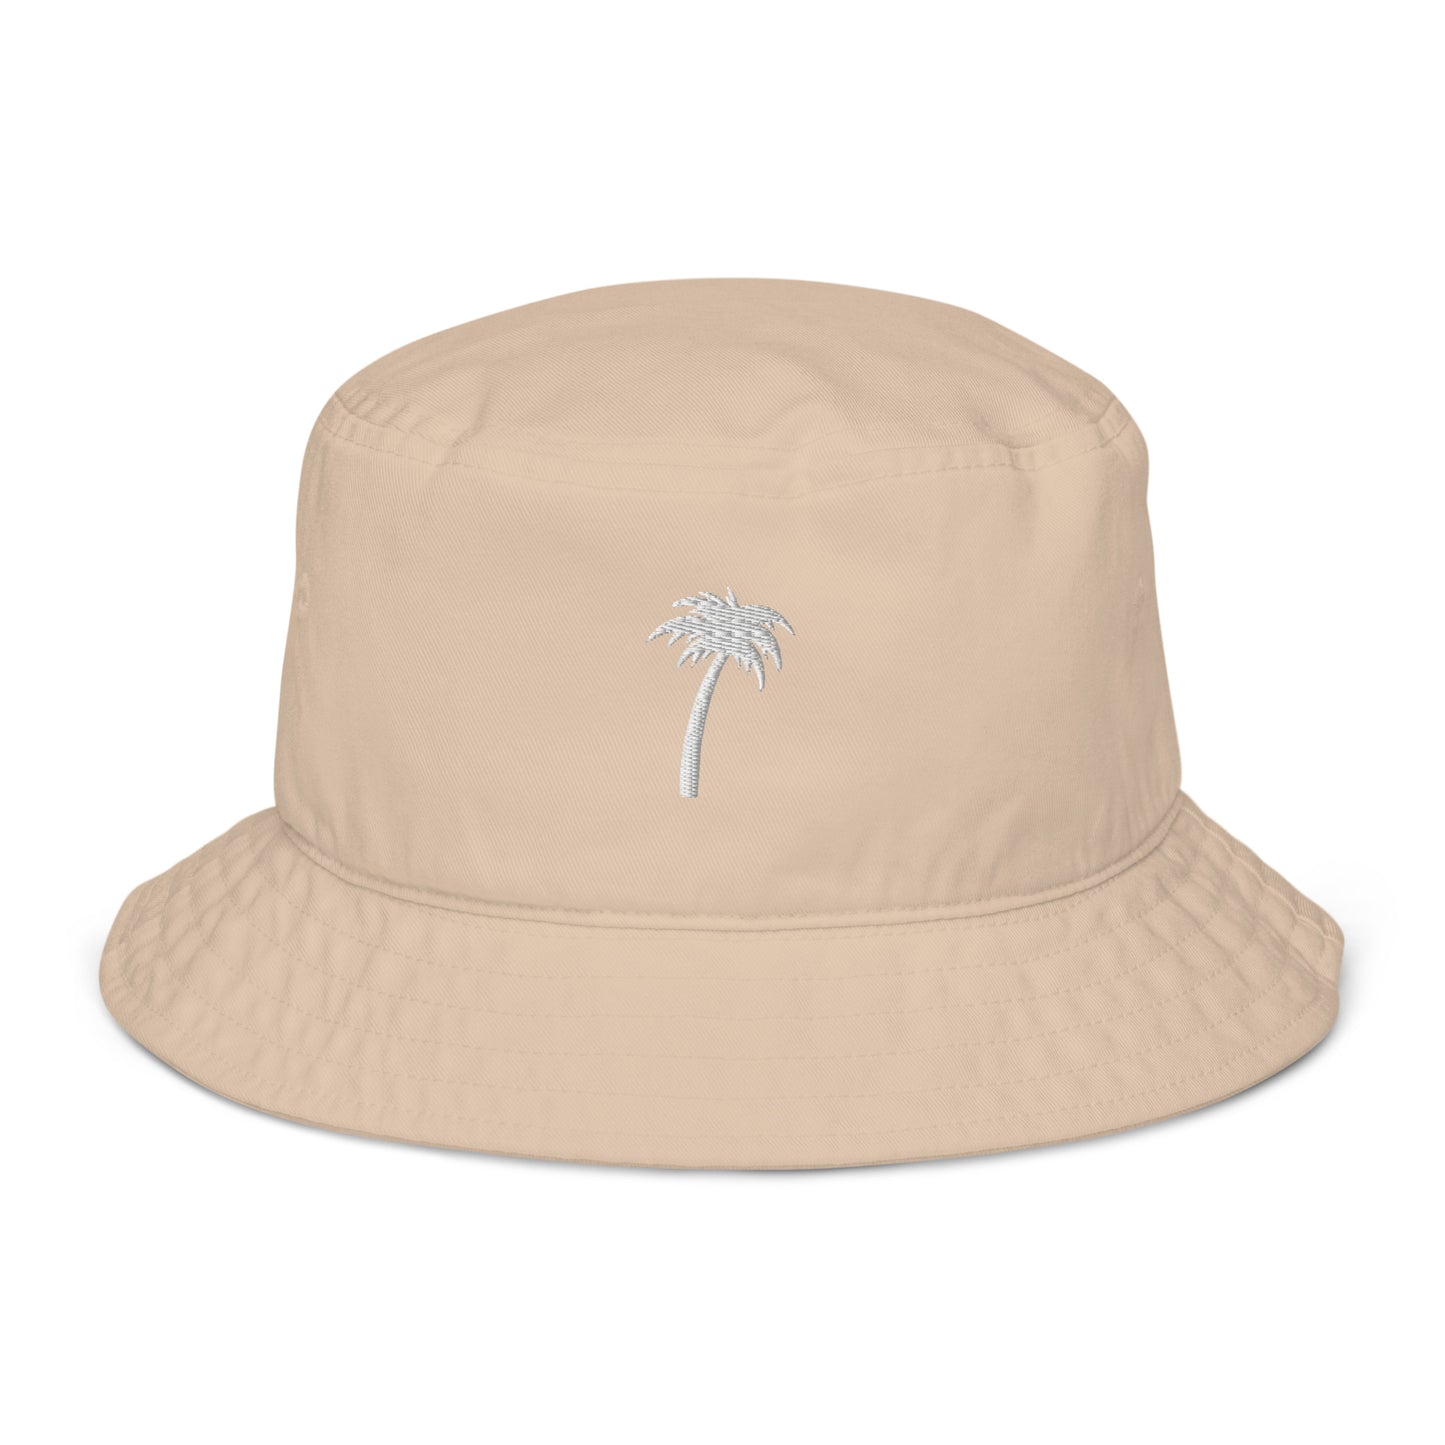 Palm Tree bucket hat